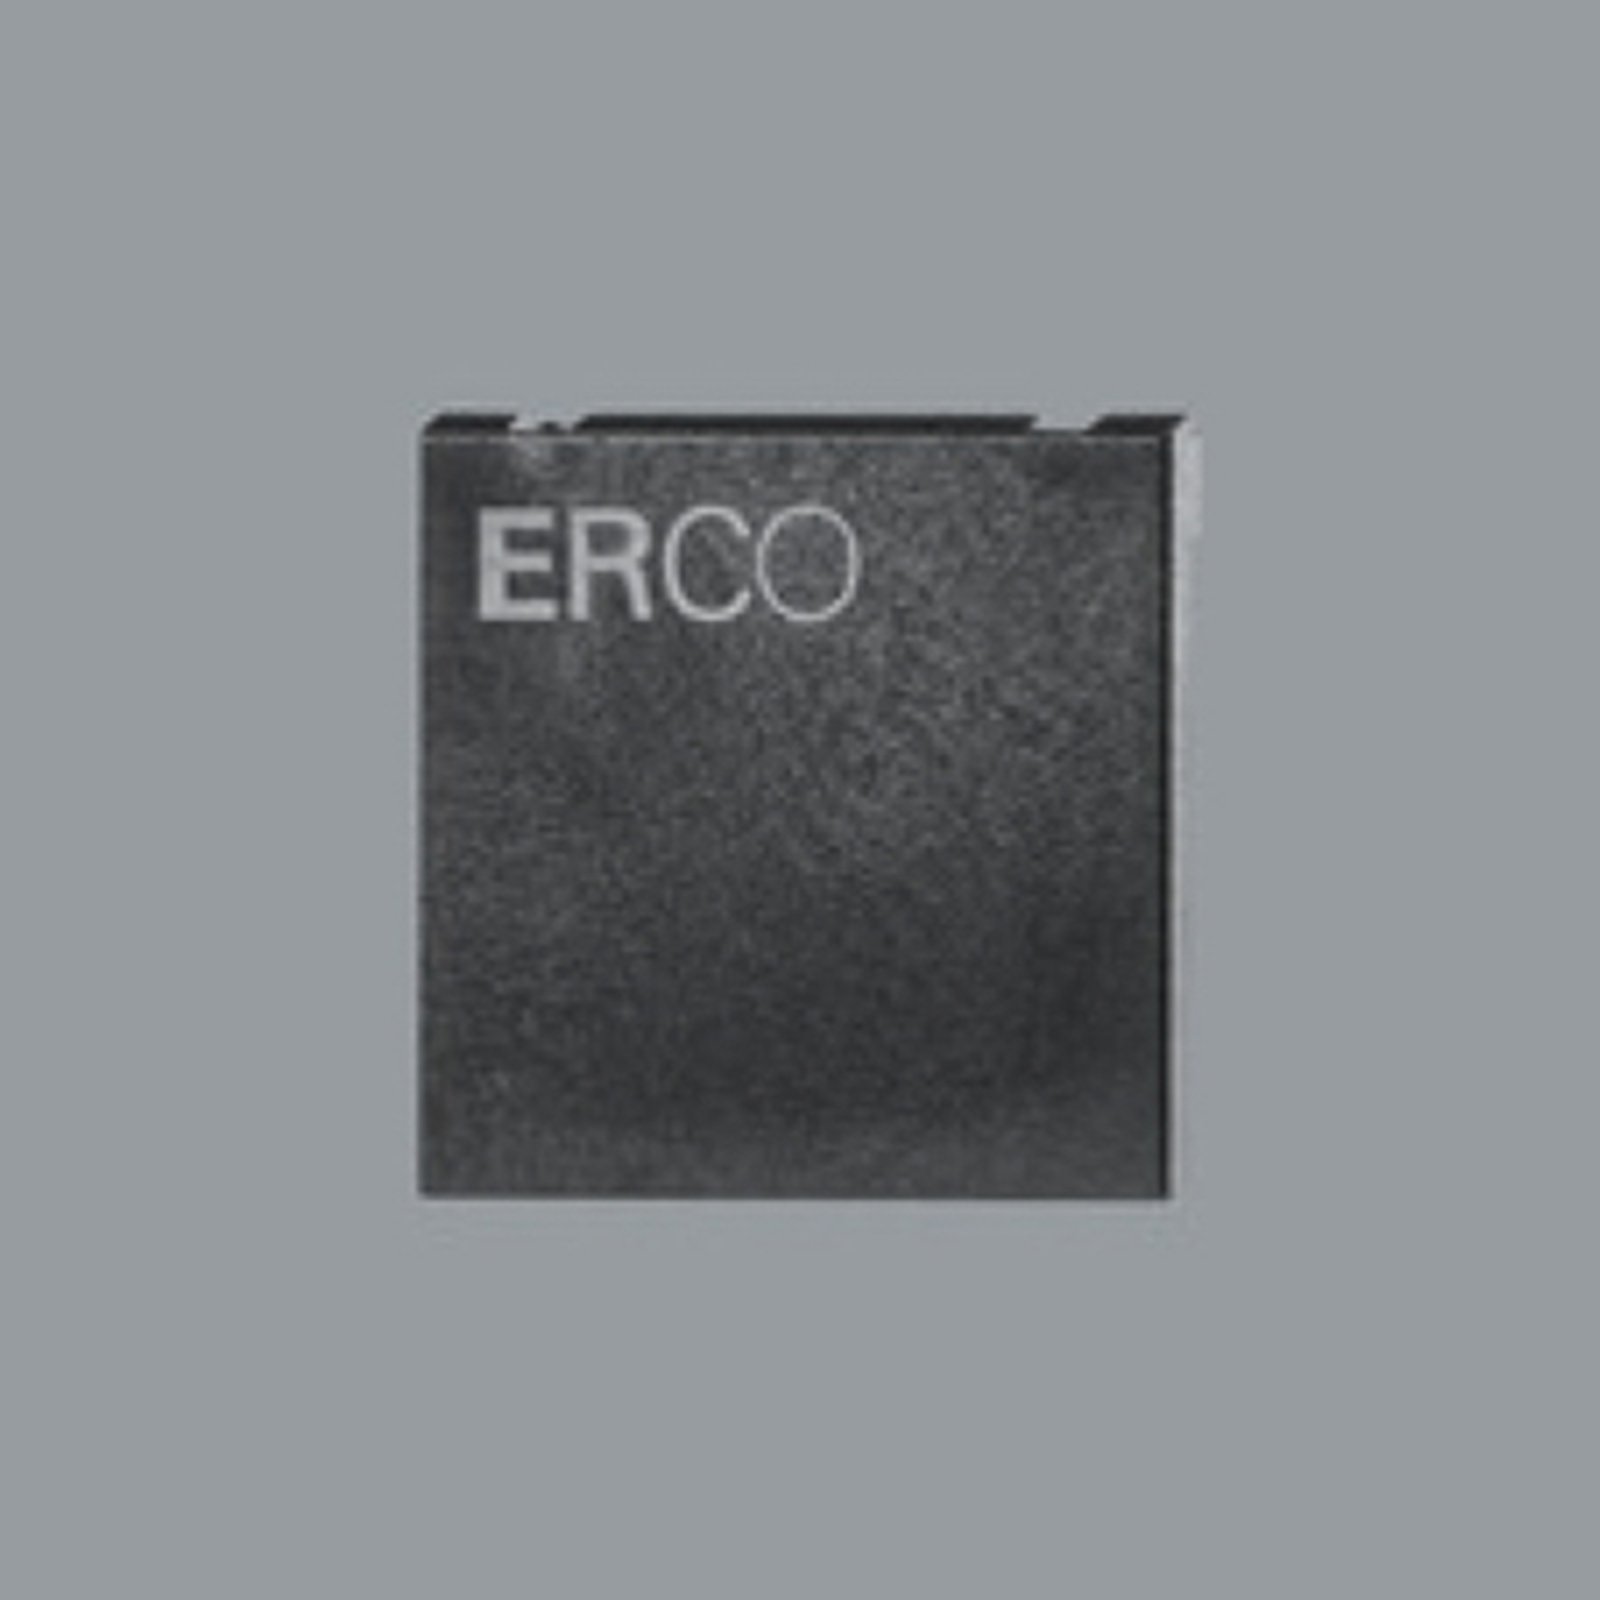 ERCO endeplade til 3-fase skinne, sort